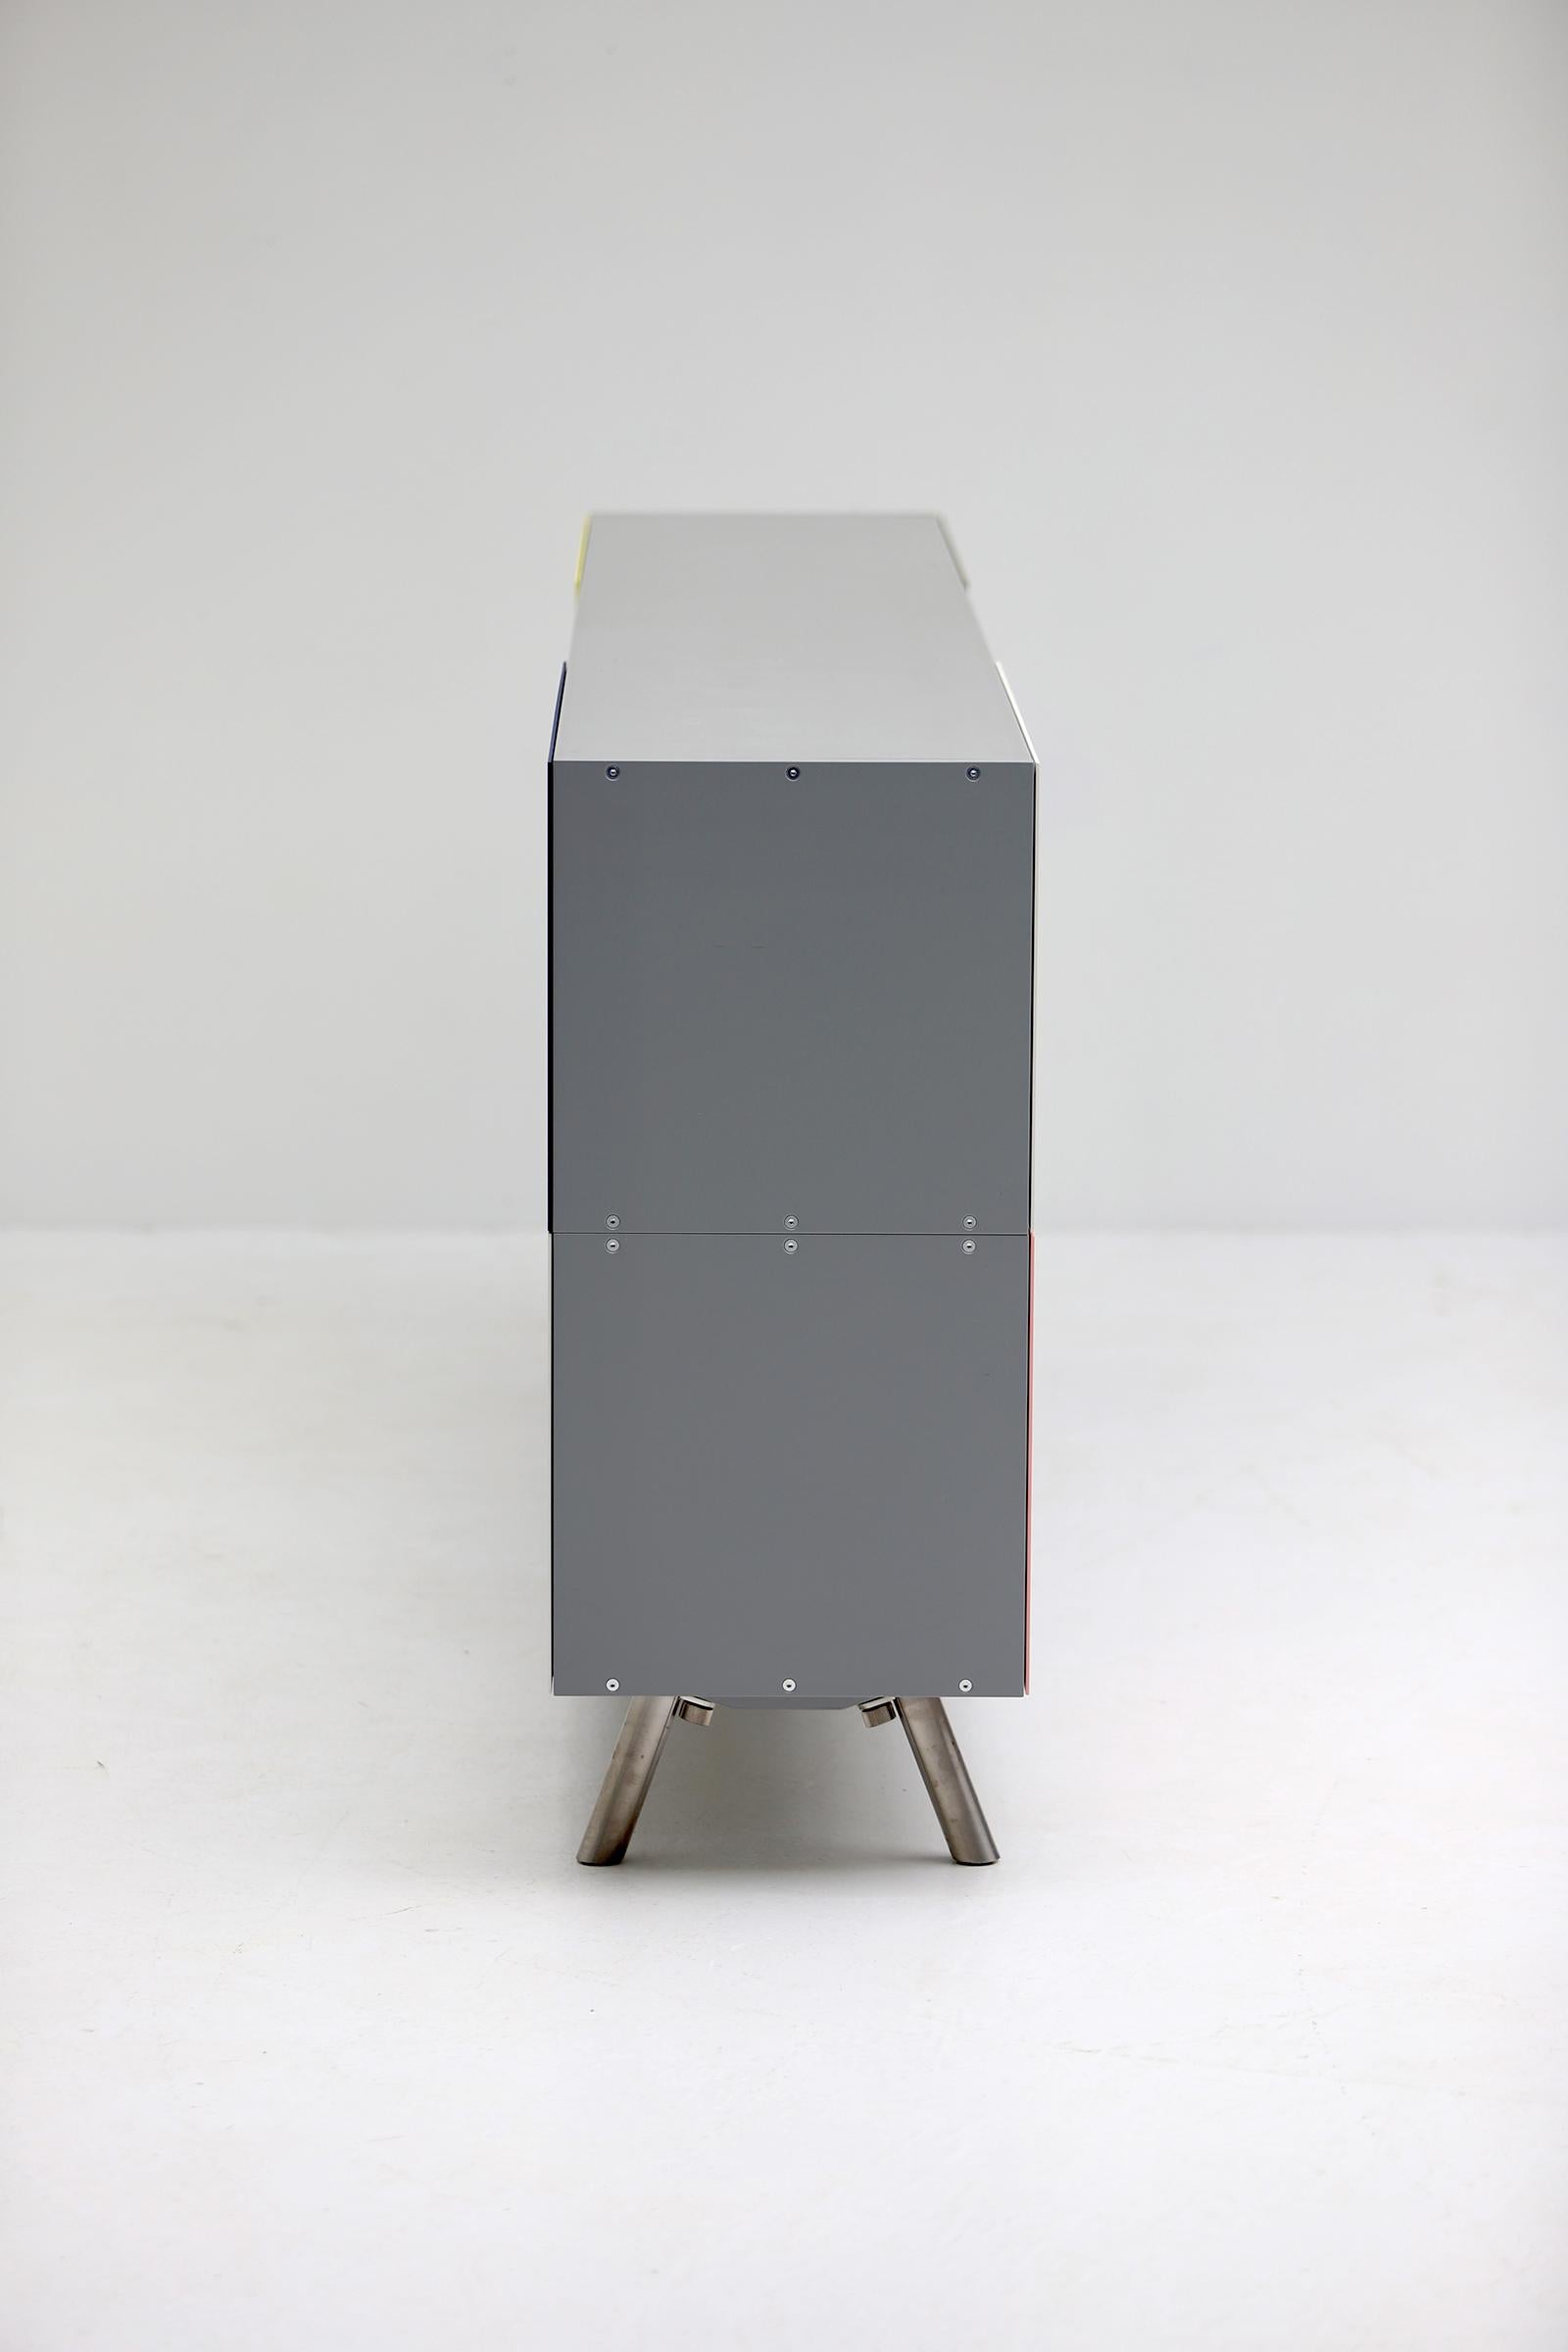 Modern aluminium sideboard by Maarten Van Severen model Hk-2 Kast for Vitra 2005 For Sale 15